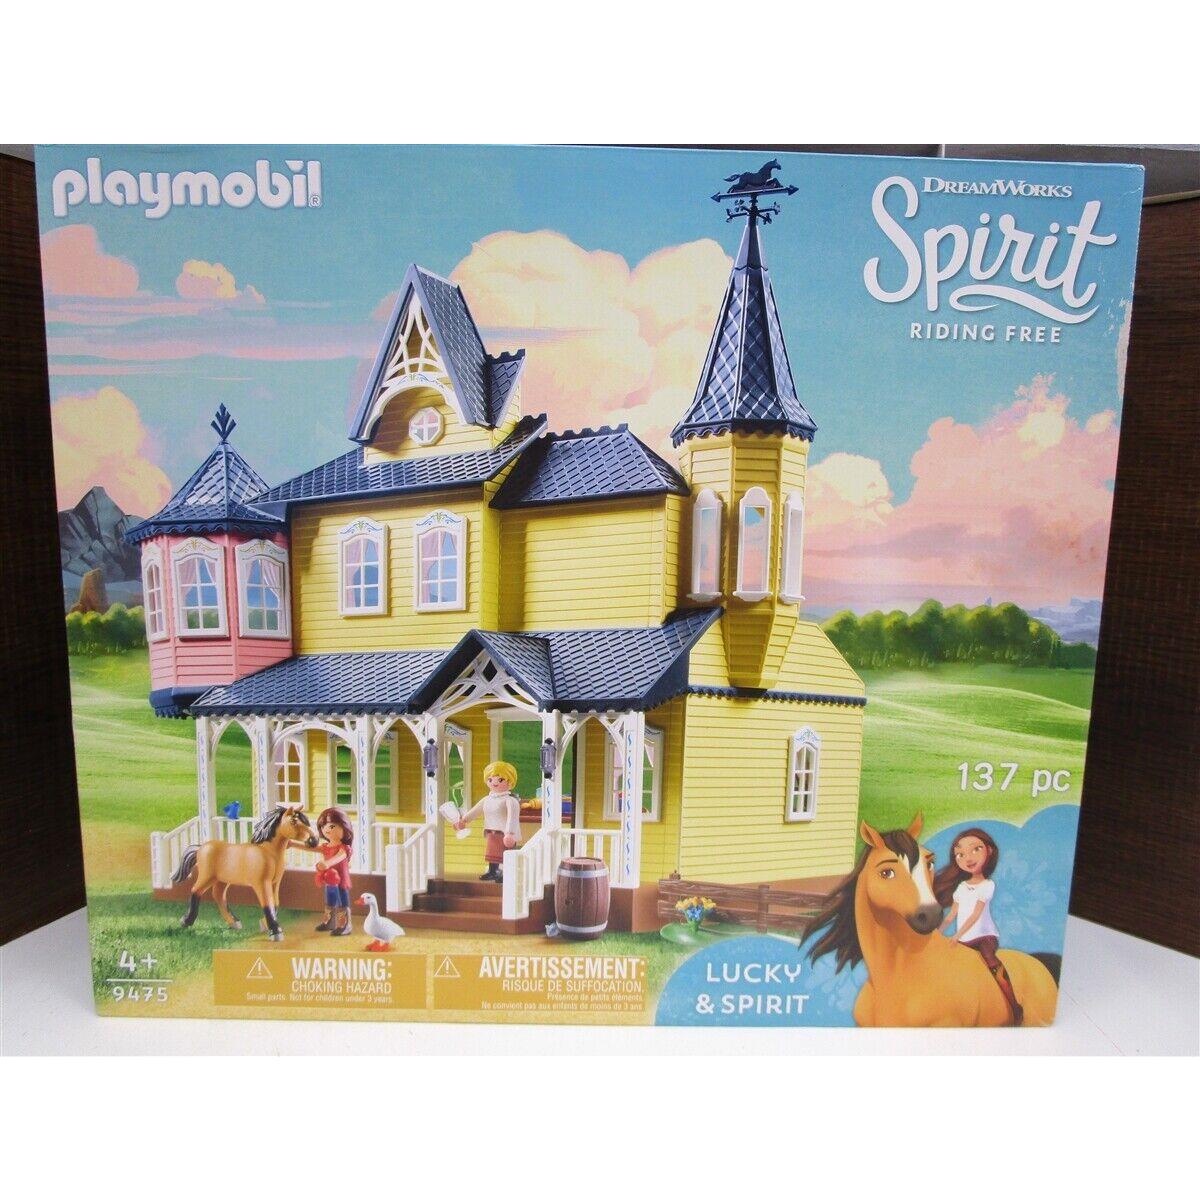 Playmobil 9475 Dreamworks Spirit Riding Free 137 pc